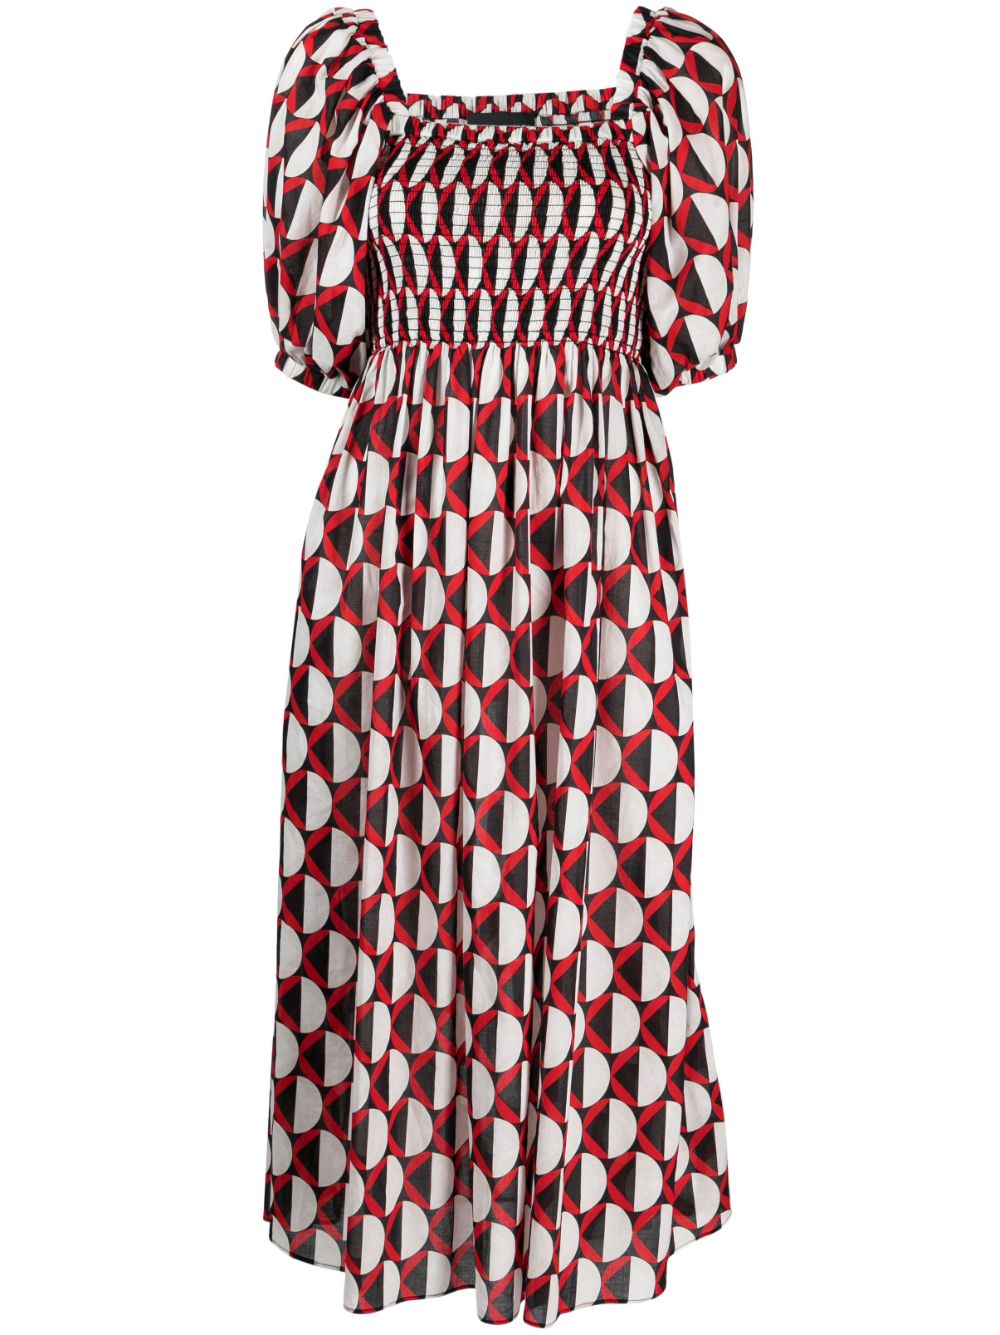 Cynthia Rowley geometric-print cotton dress - Red